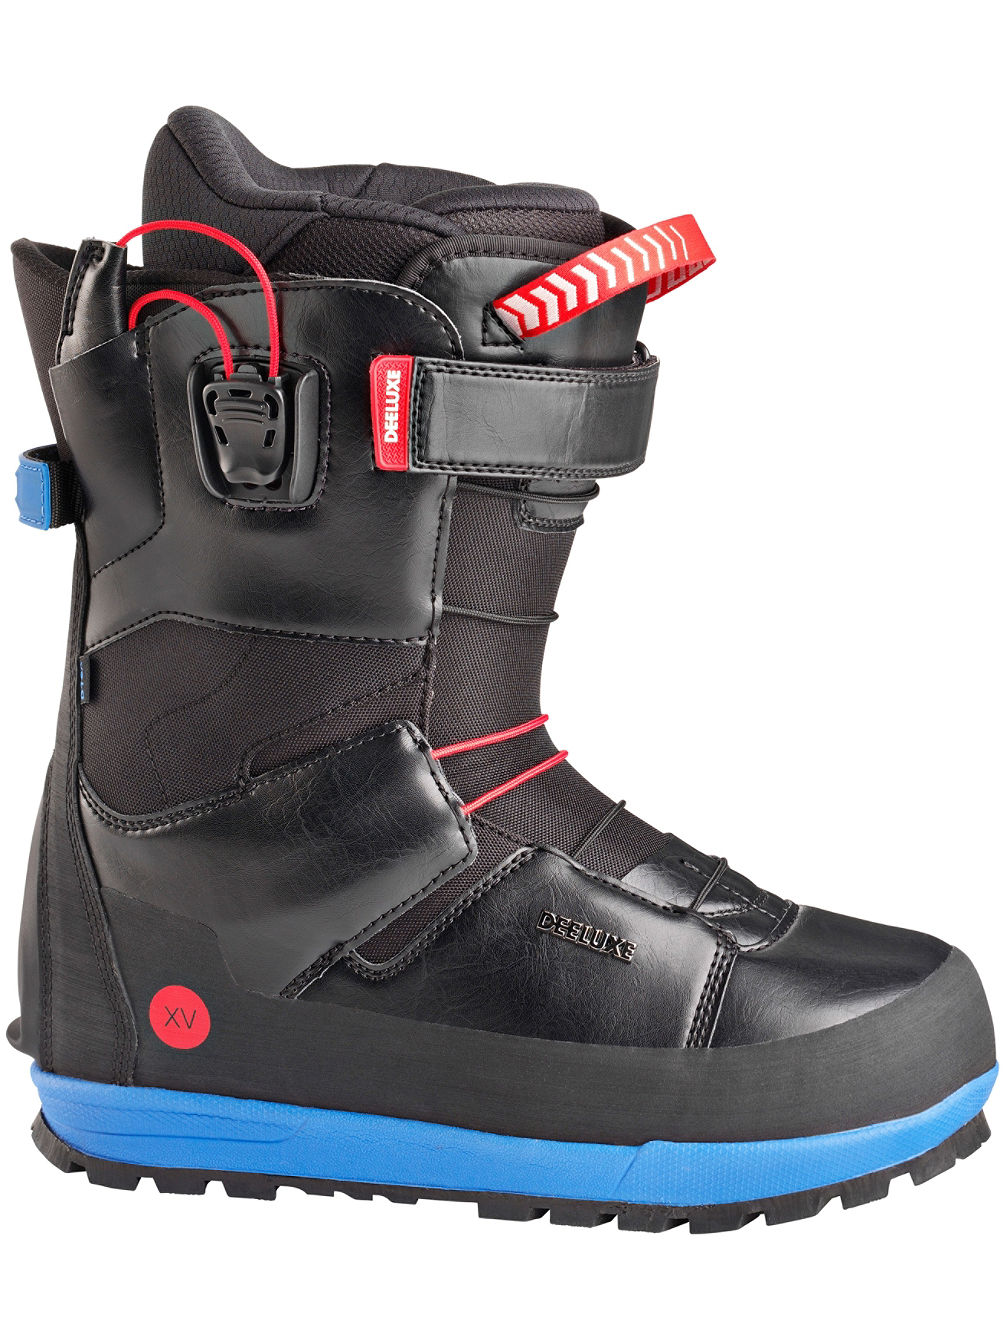 Spark Xv Tfp Boots de Snowboard